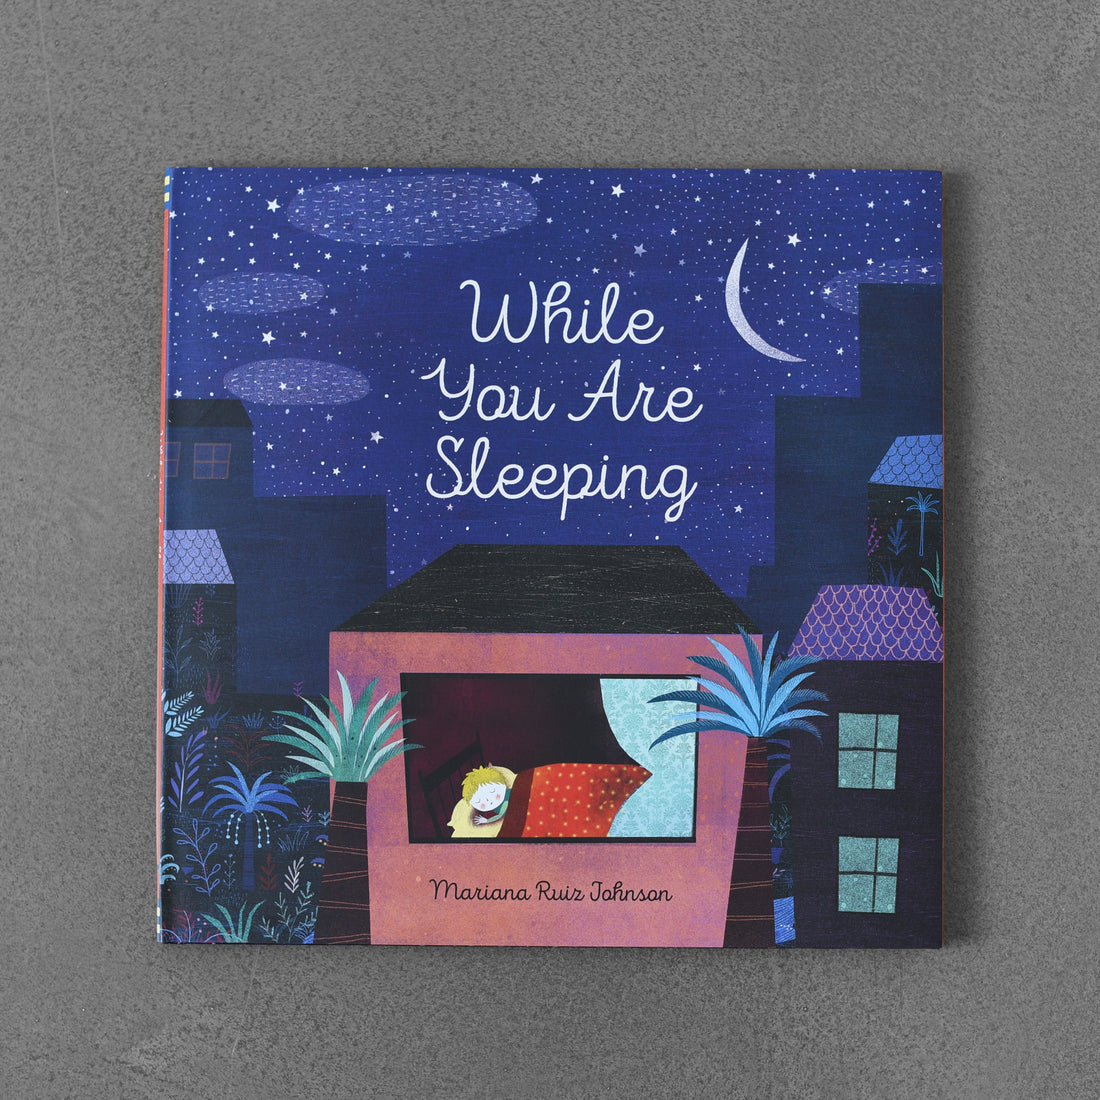 While You Are Sleeping - Mariana Ruiz Johnson